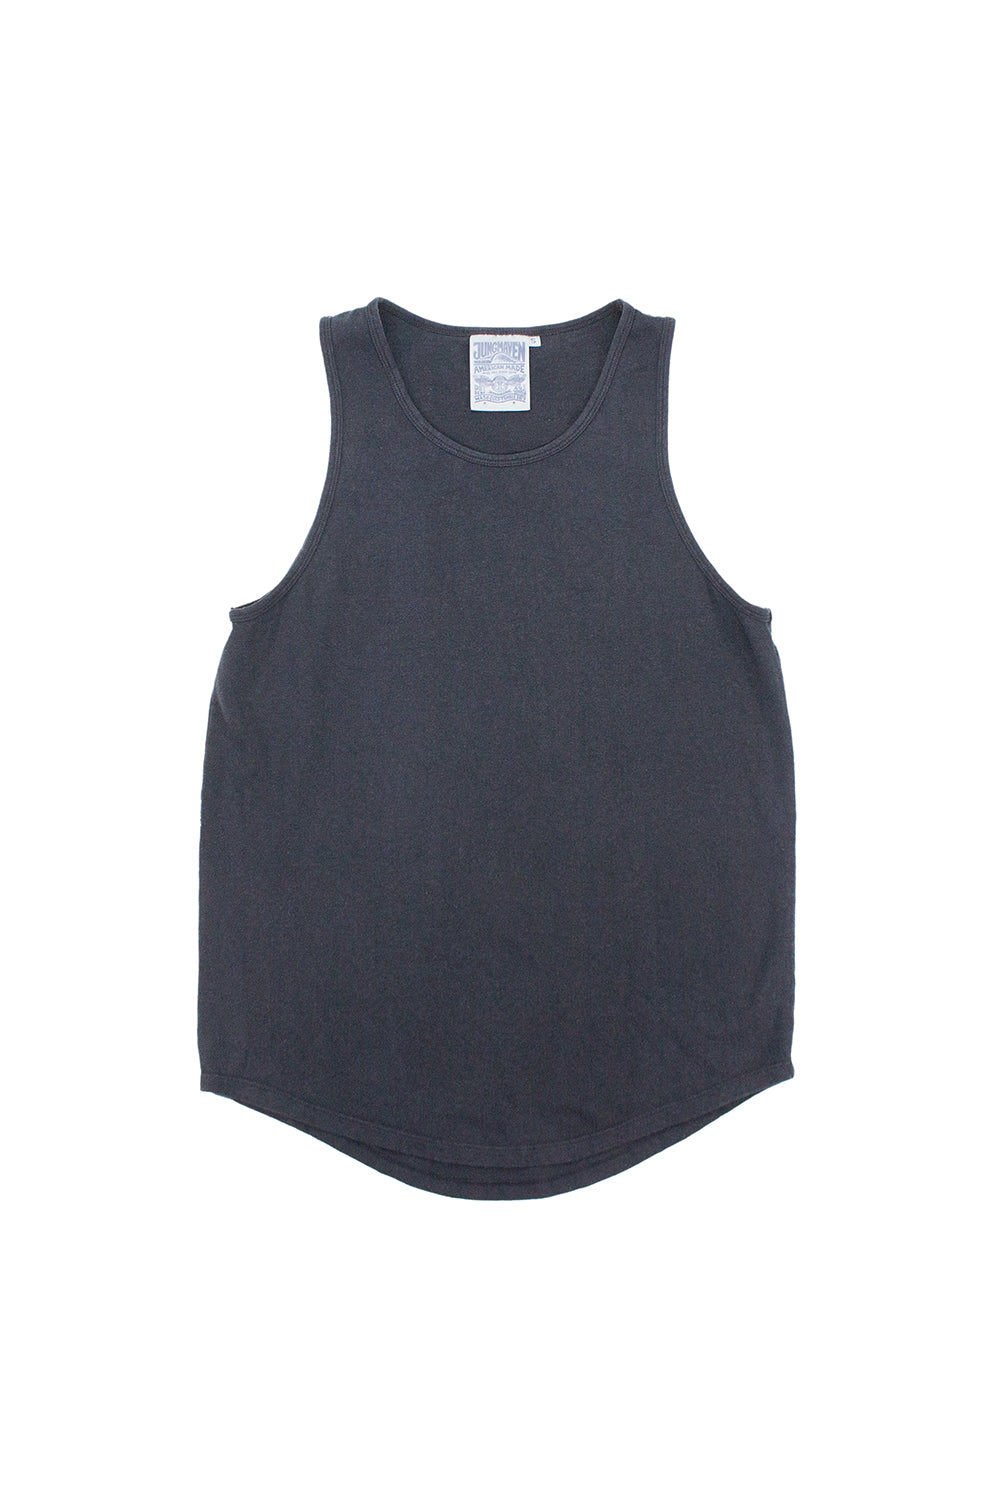 Tank Top | Jungmaven Hemp Clothing & Accessories / Color: Black